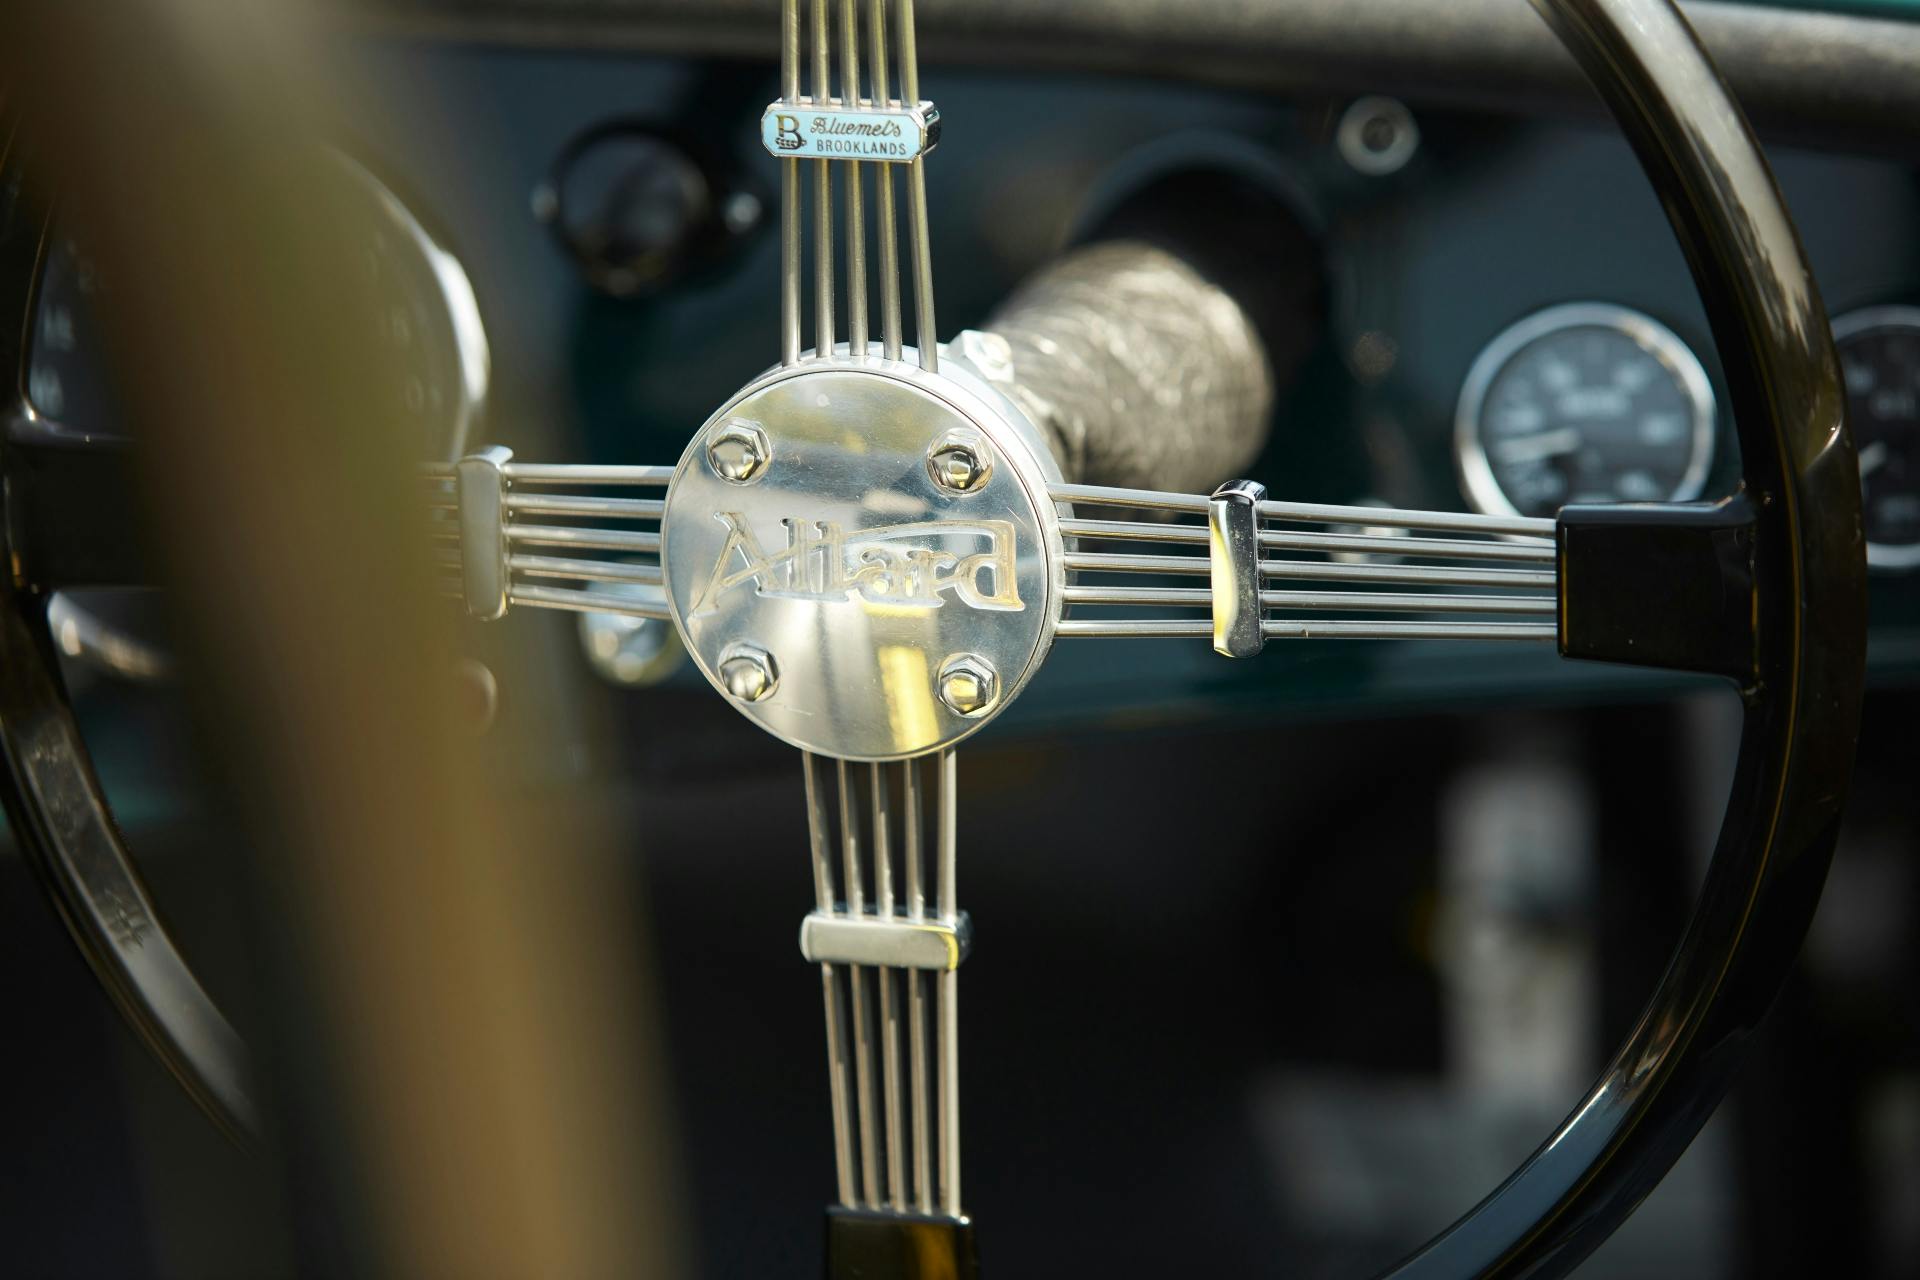 Allard JR continuation car steering wheel detail